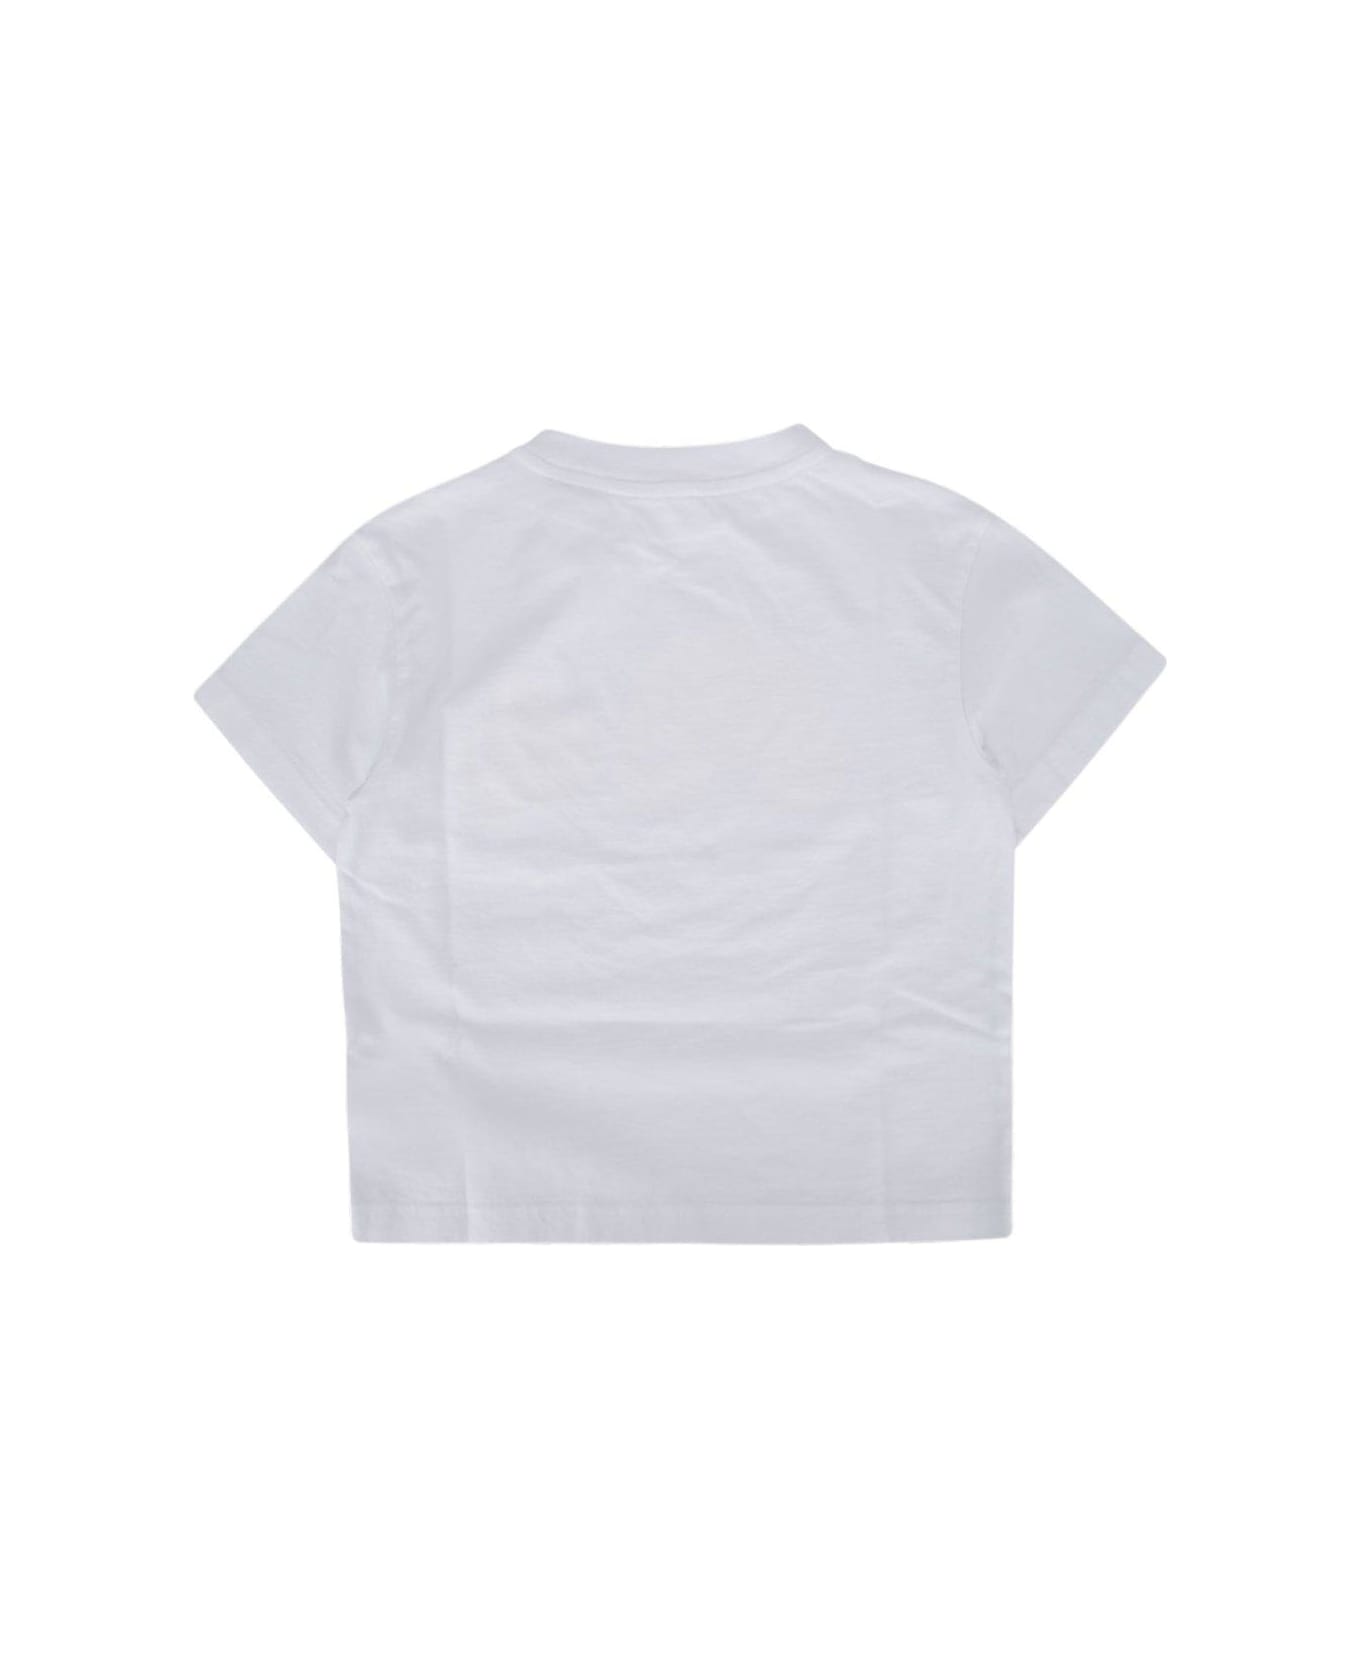 Palm Angels Bear Printed Crewneck T-shirt - White